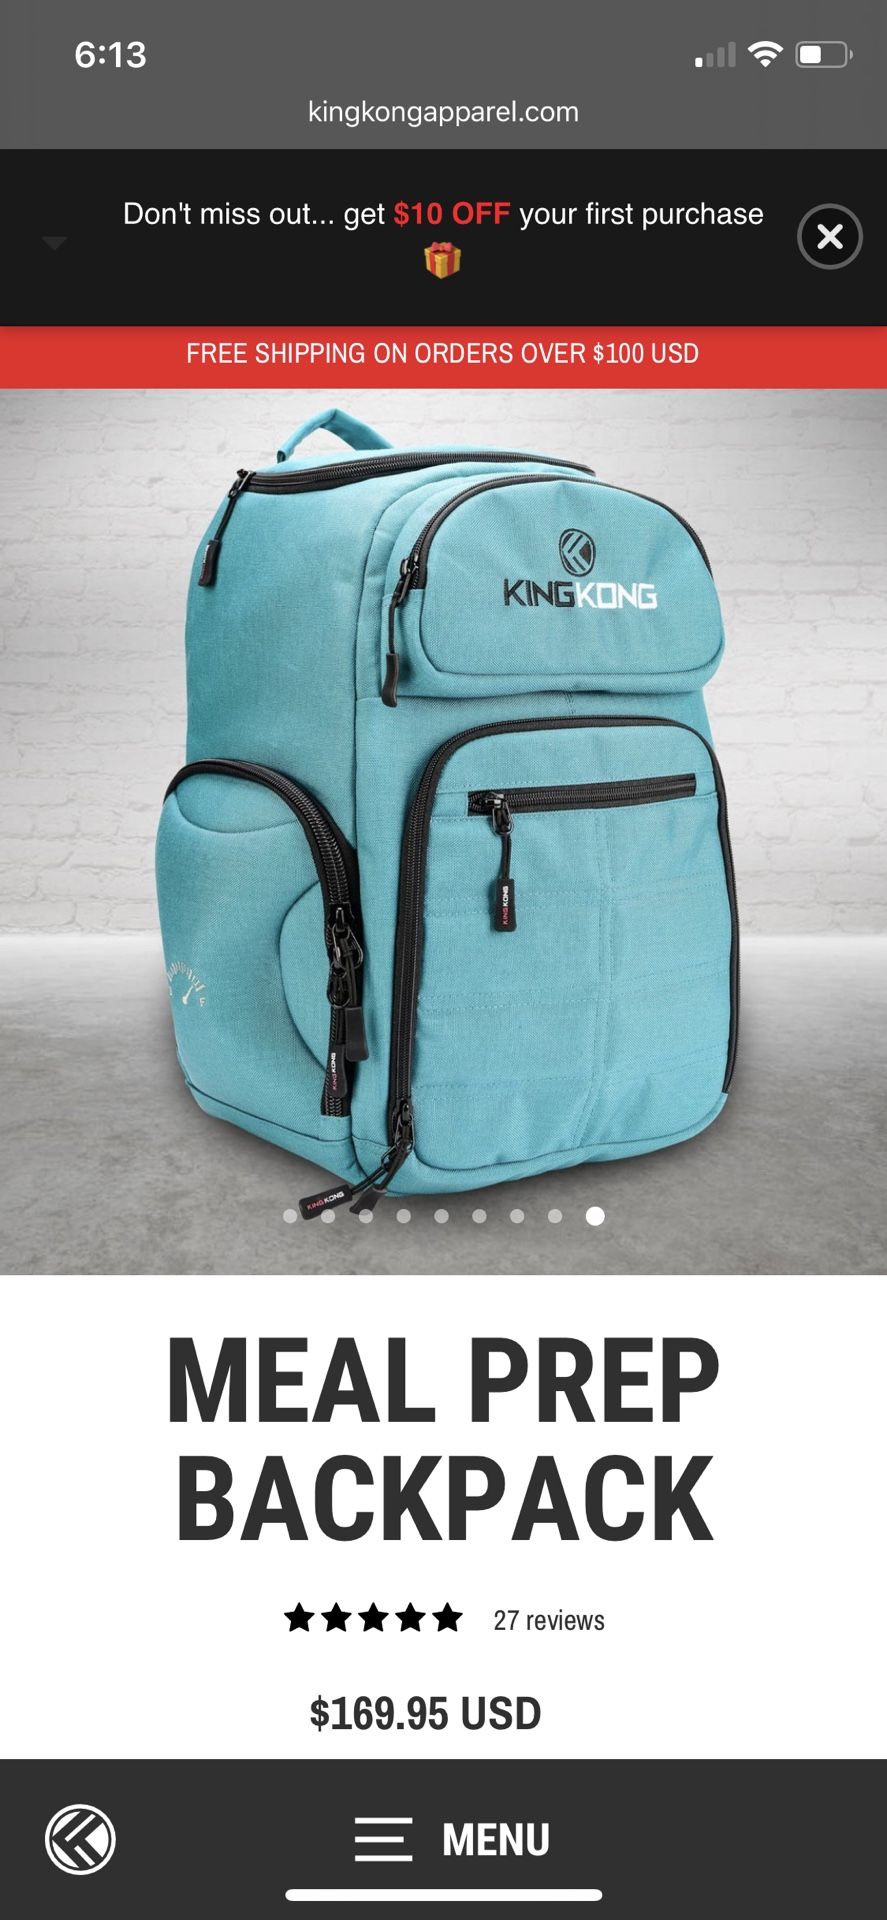 King Kong meal prep backpack